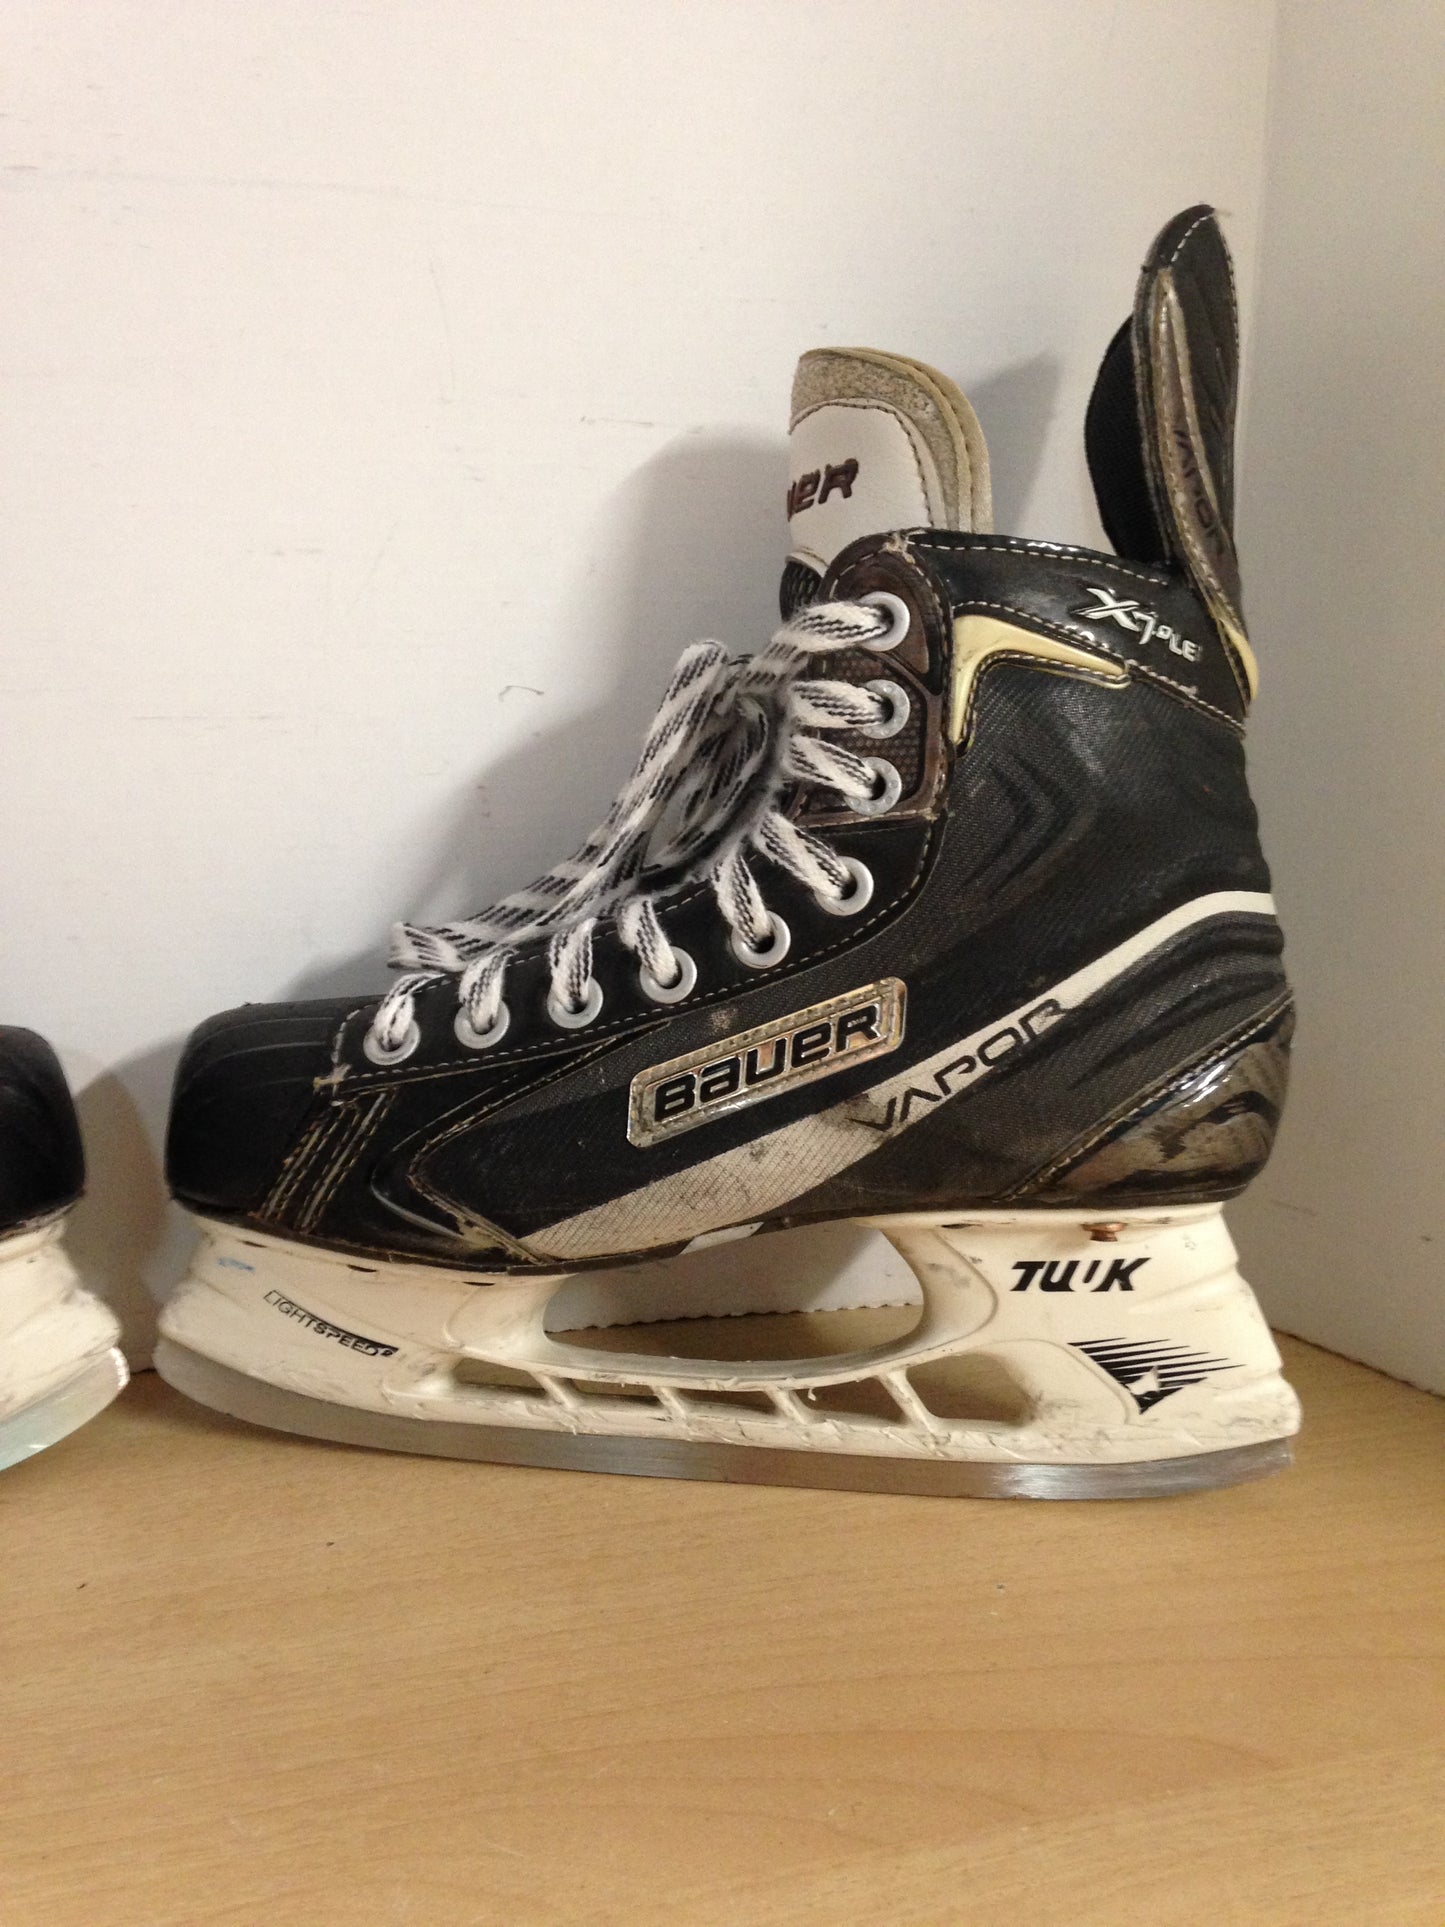 Hockey Skates Child Size 5.5 Shoe Size Bauer Vapor X7.0 LE Minor Wear